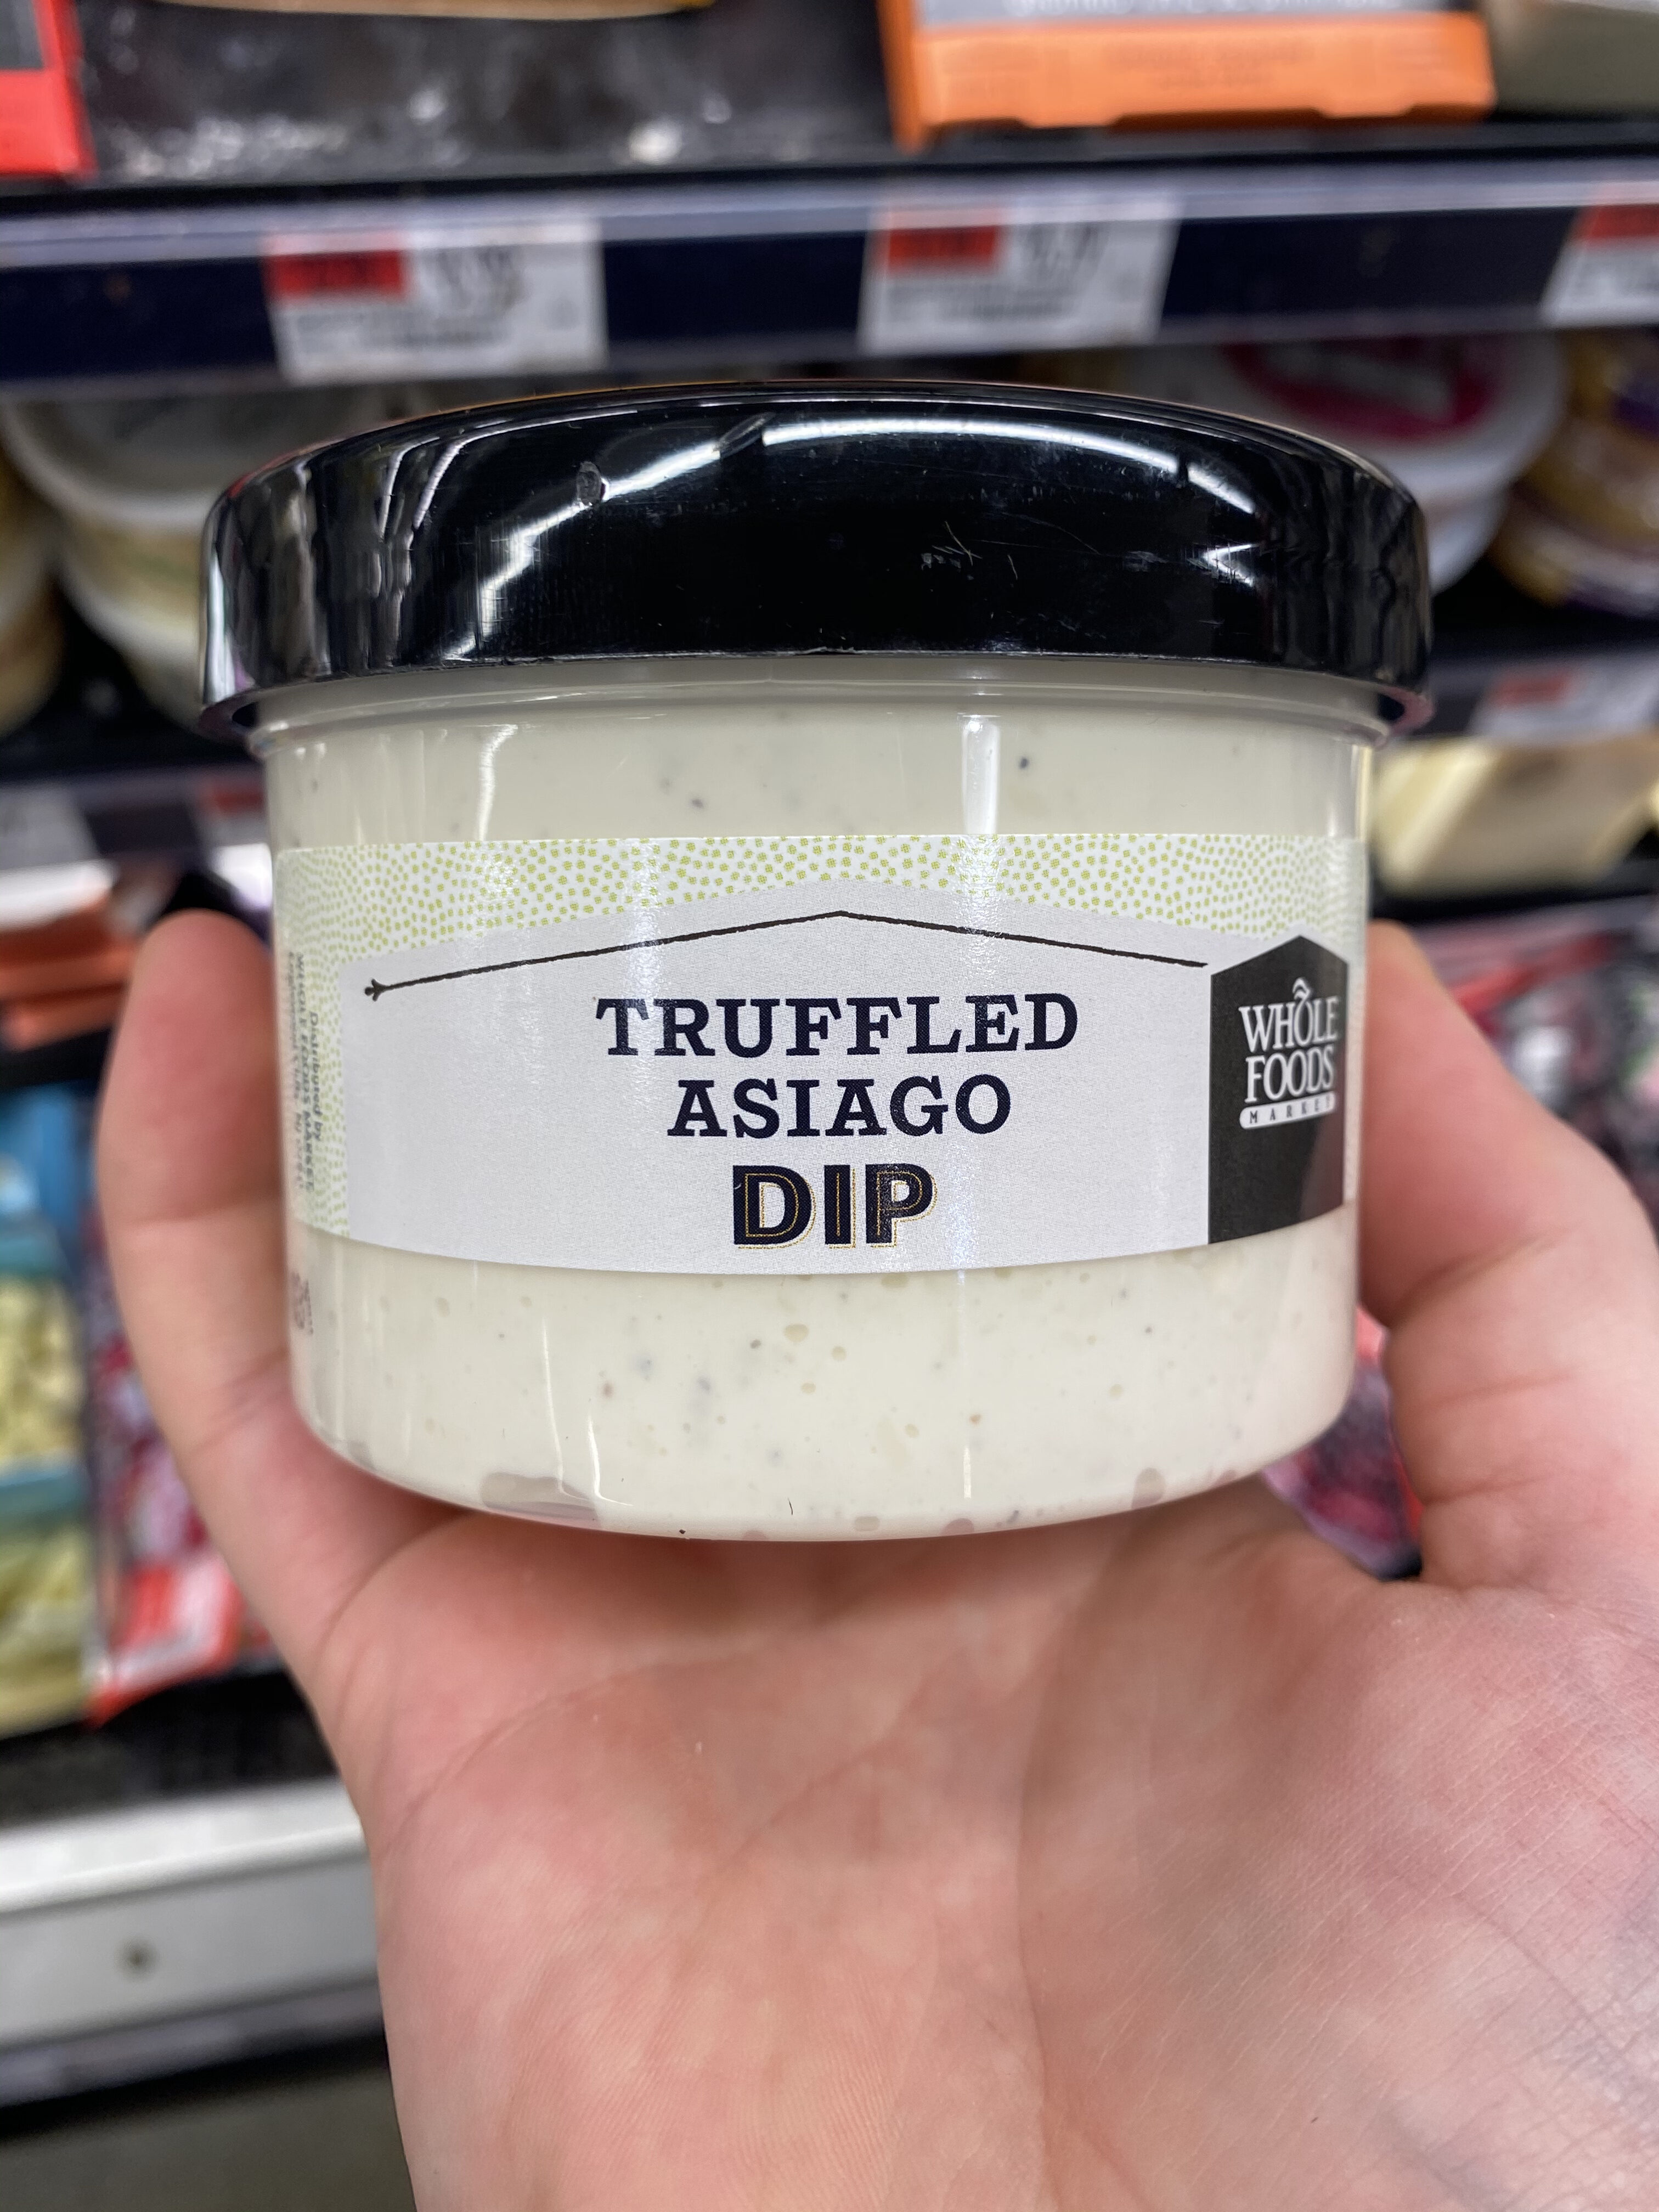 Whole foods market, truffled ricotta asiago dip - Product